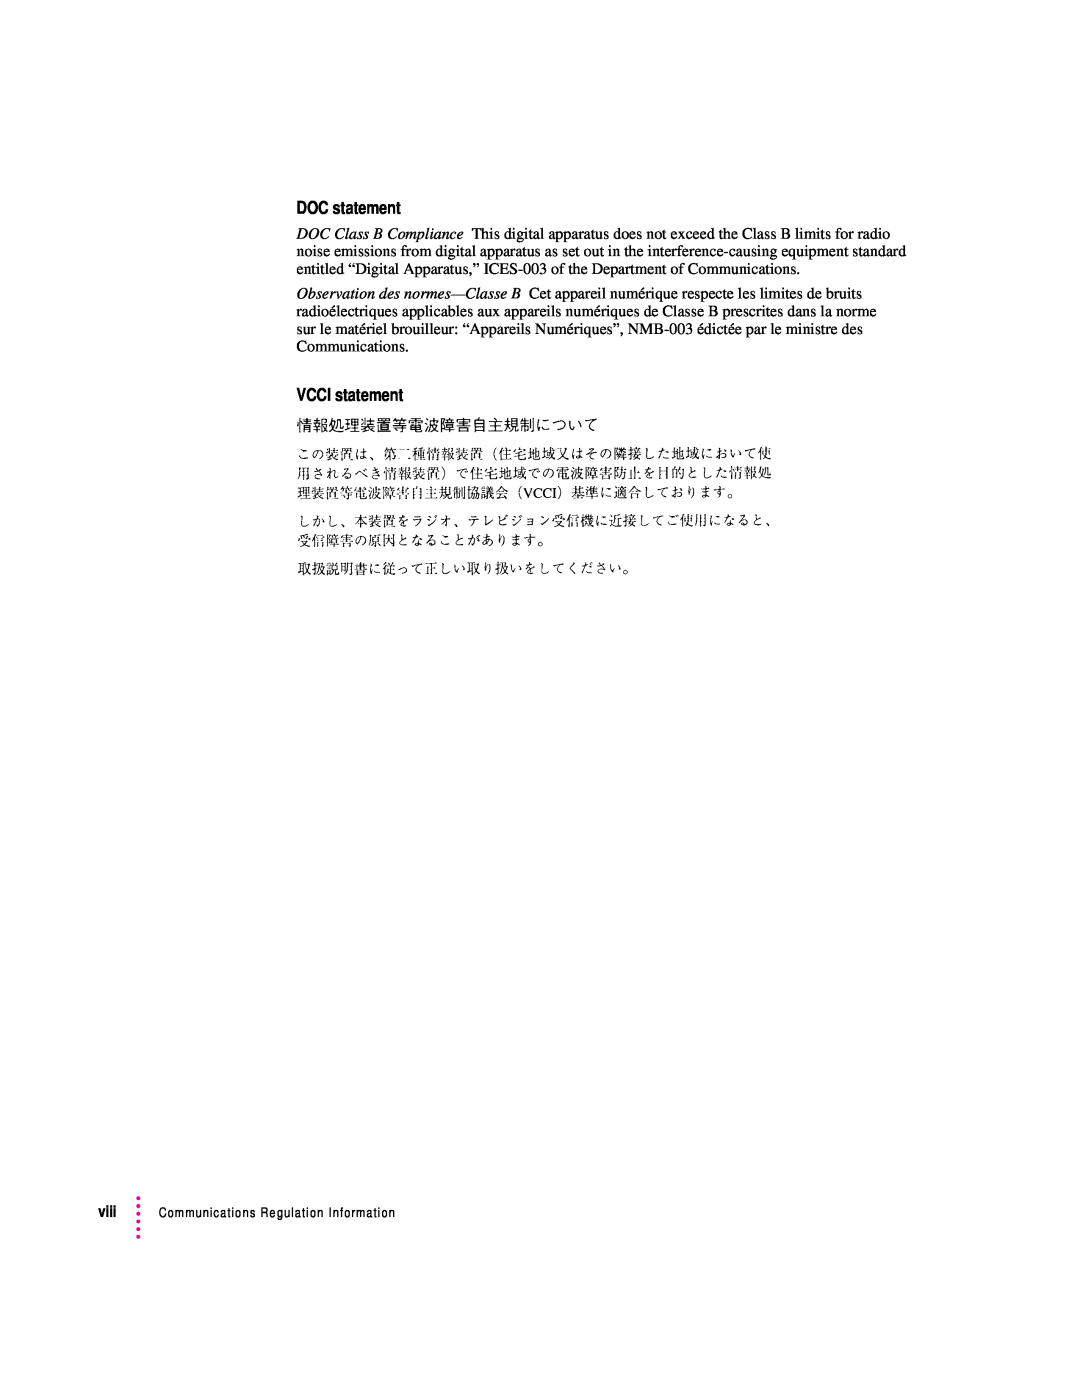 Apple 2300 Series manual DOC statement, VCCI statement, viii Communications Regulation Information 